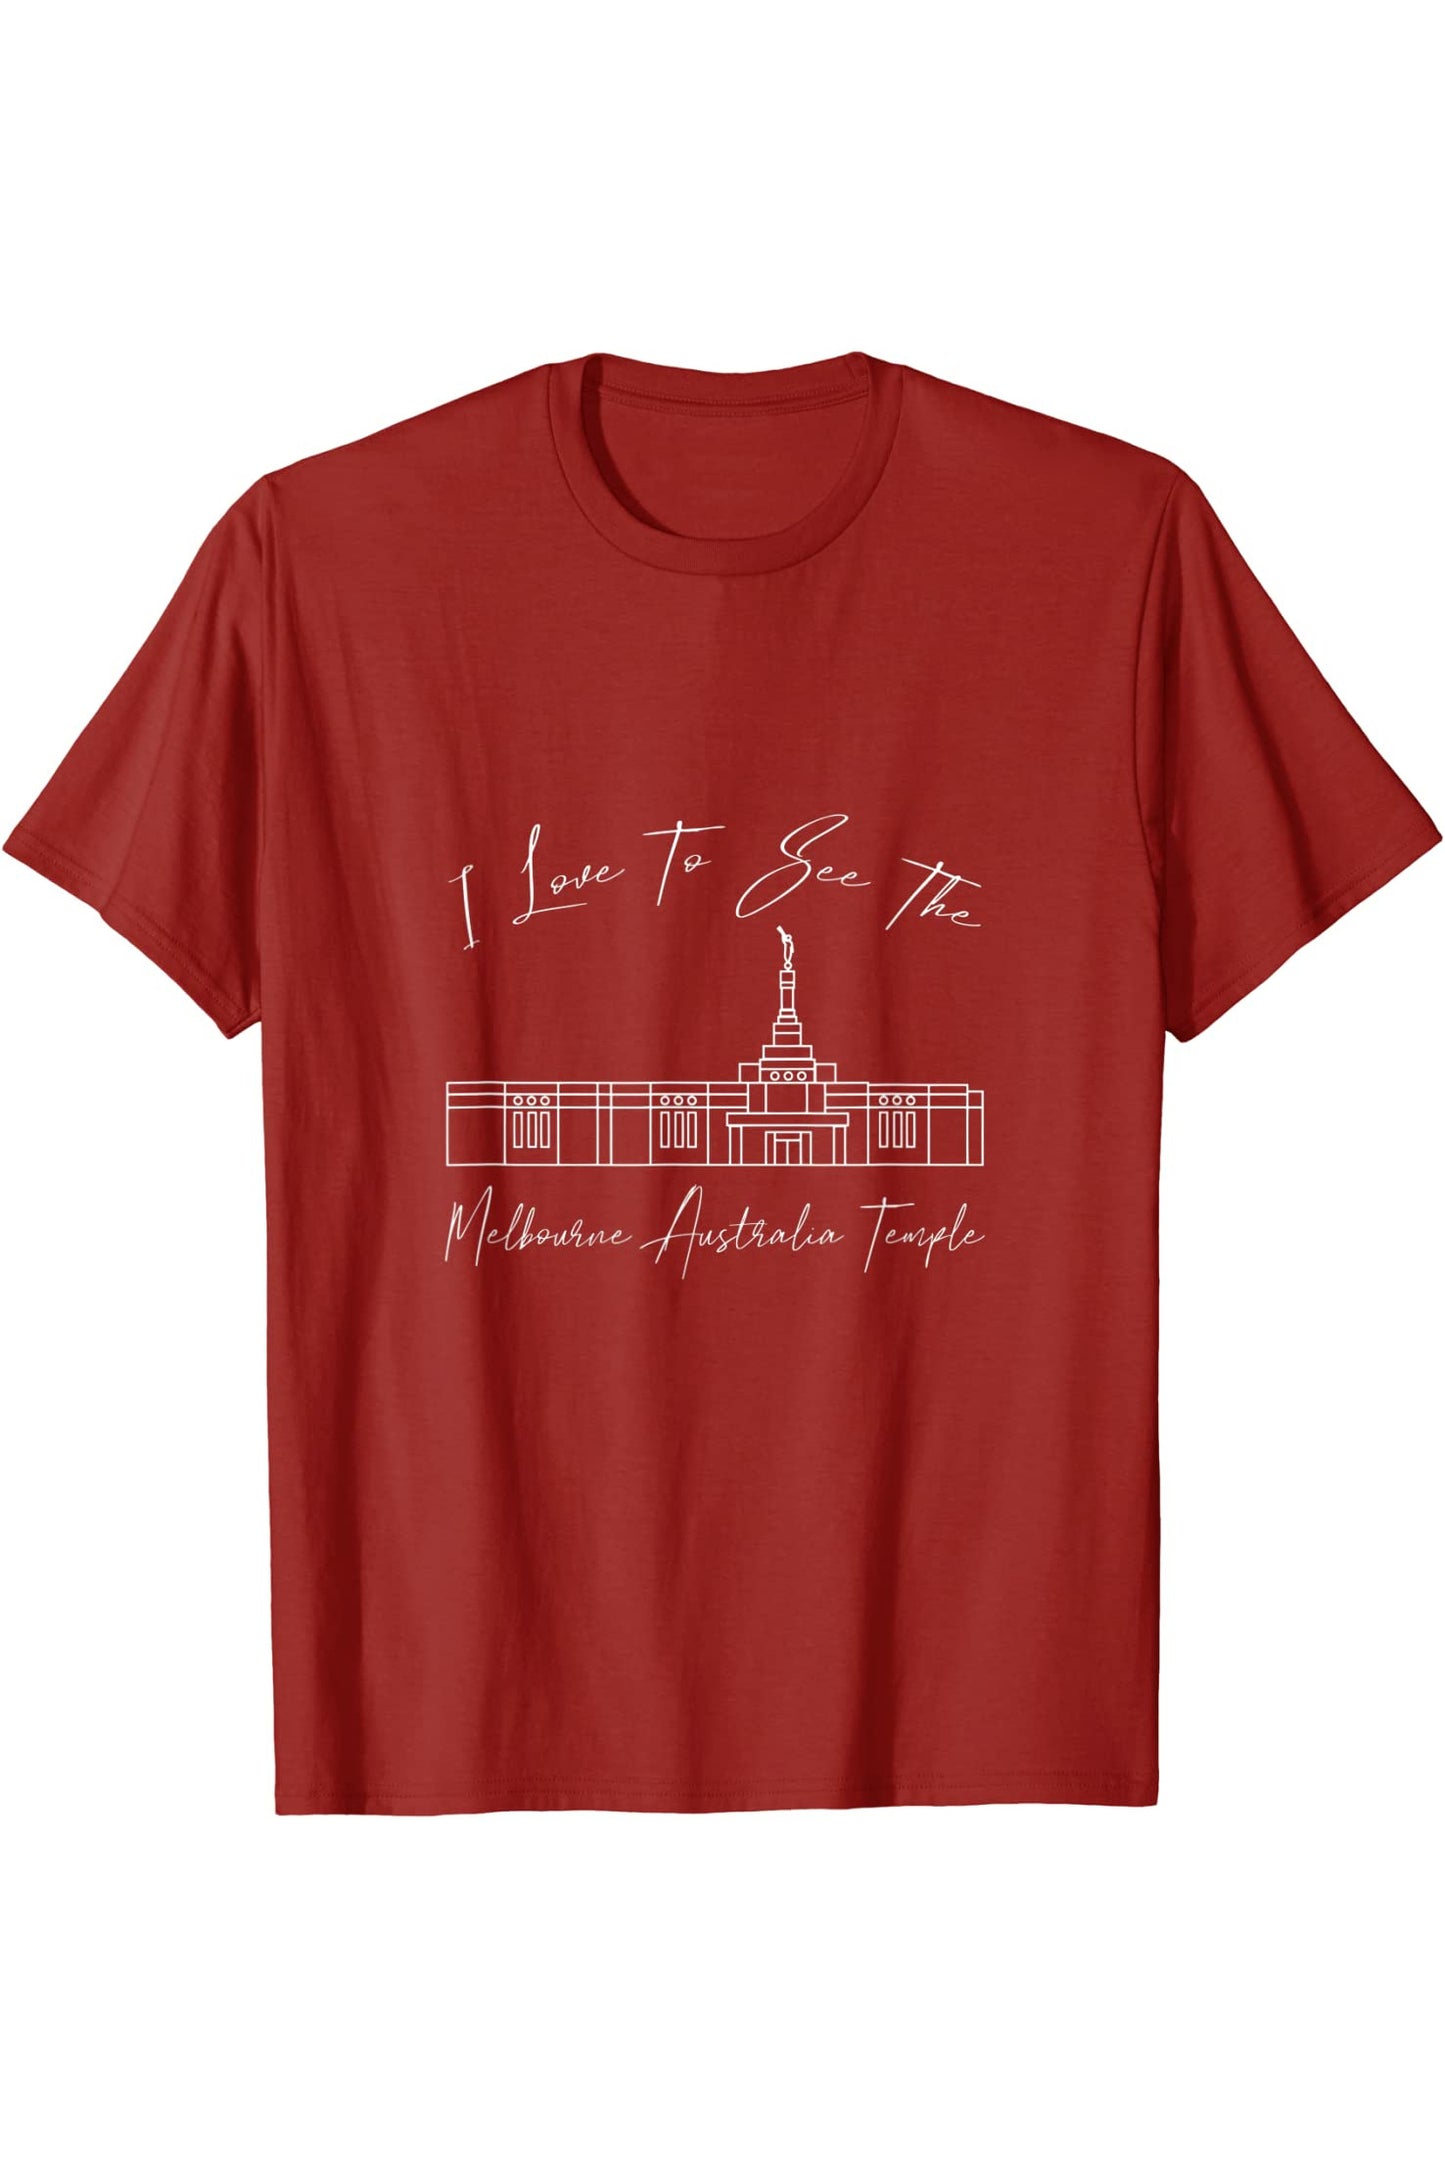 Melbourne Australia Temple T-Shirt - Calligraphy Style (English) US